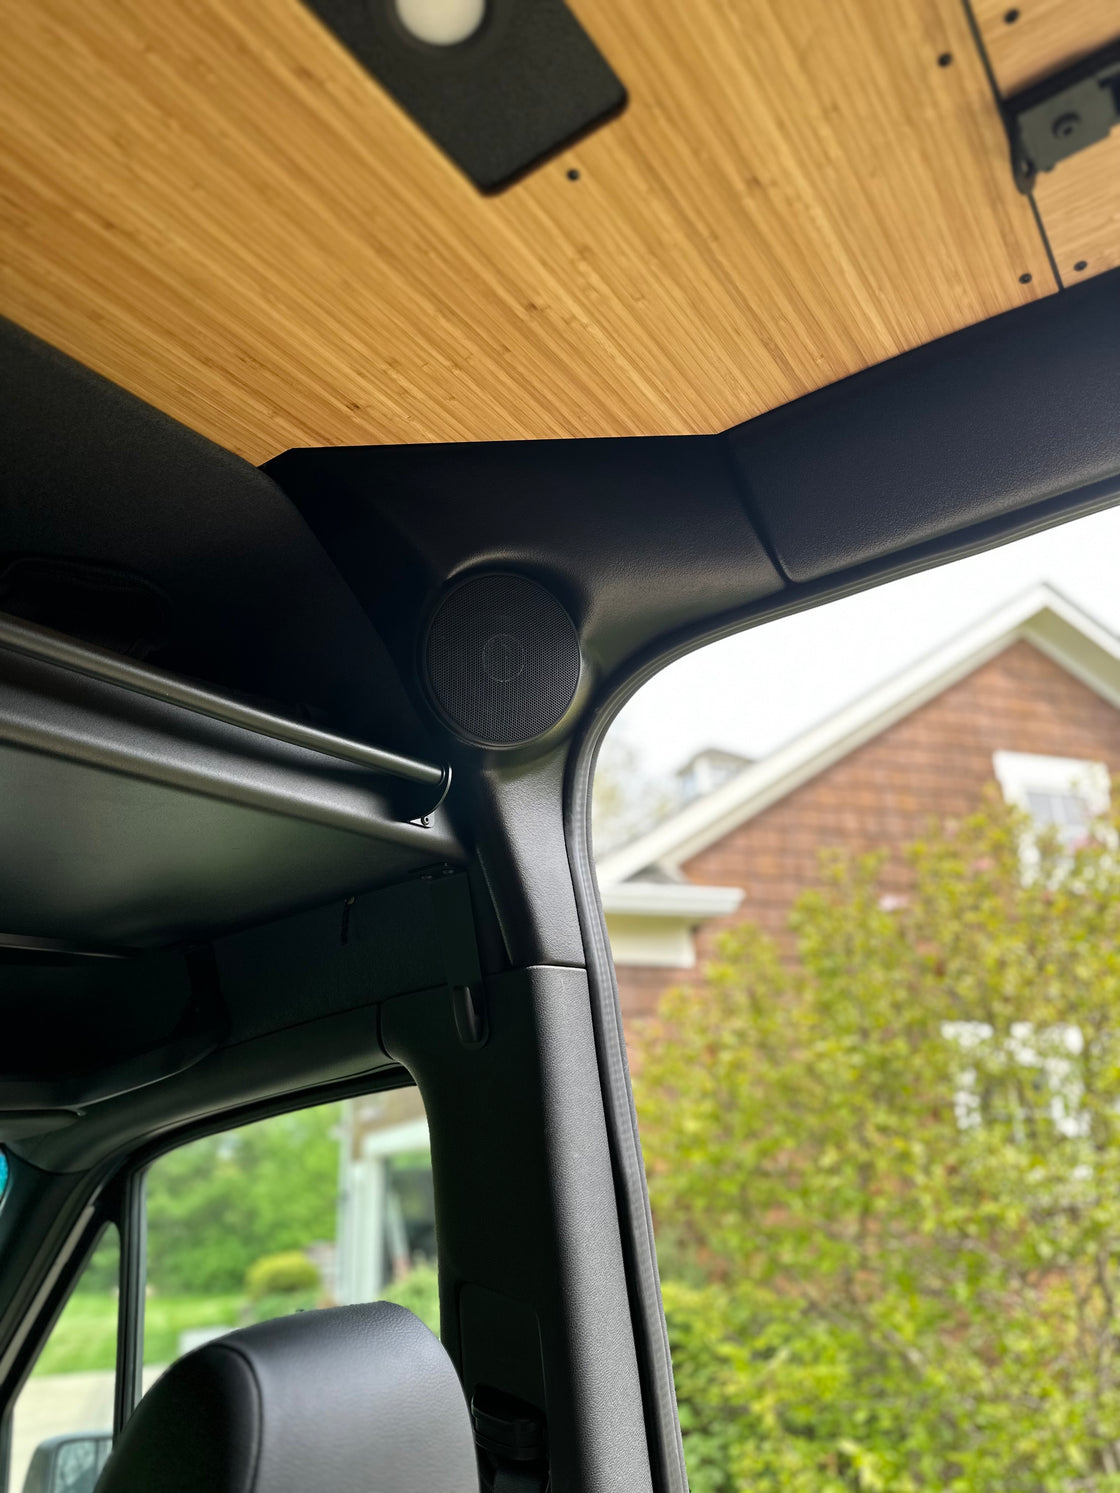 Audio trim kit in passenger overhead threshold